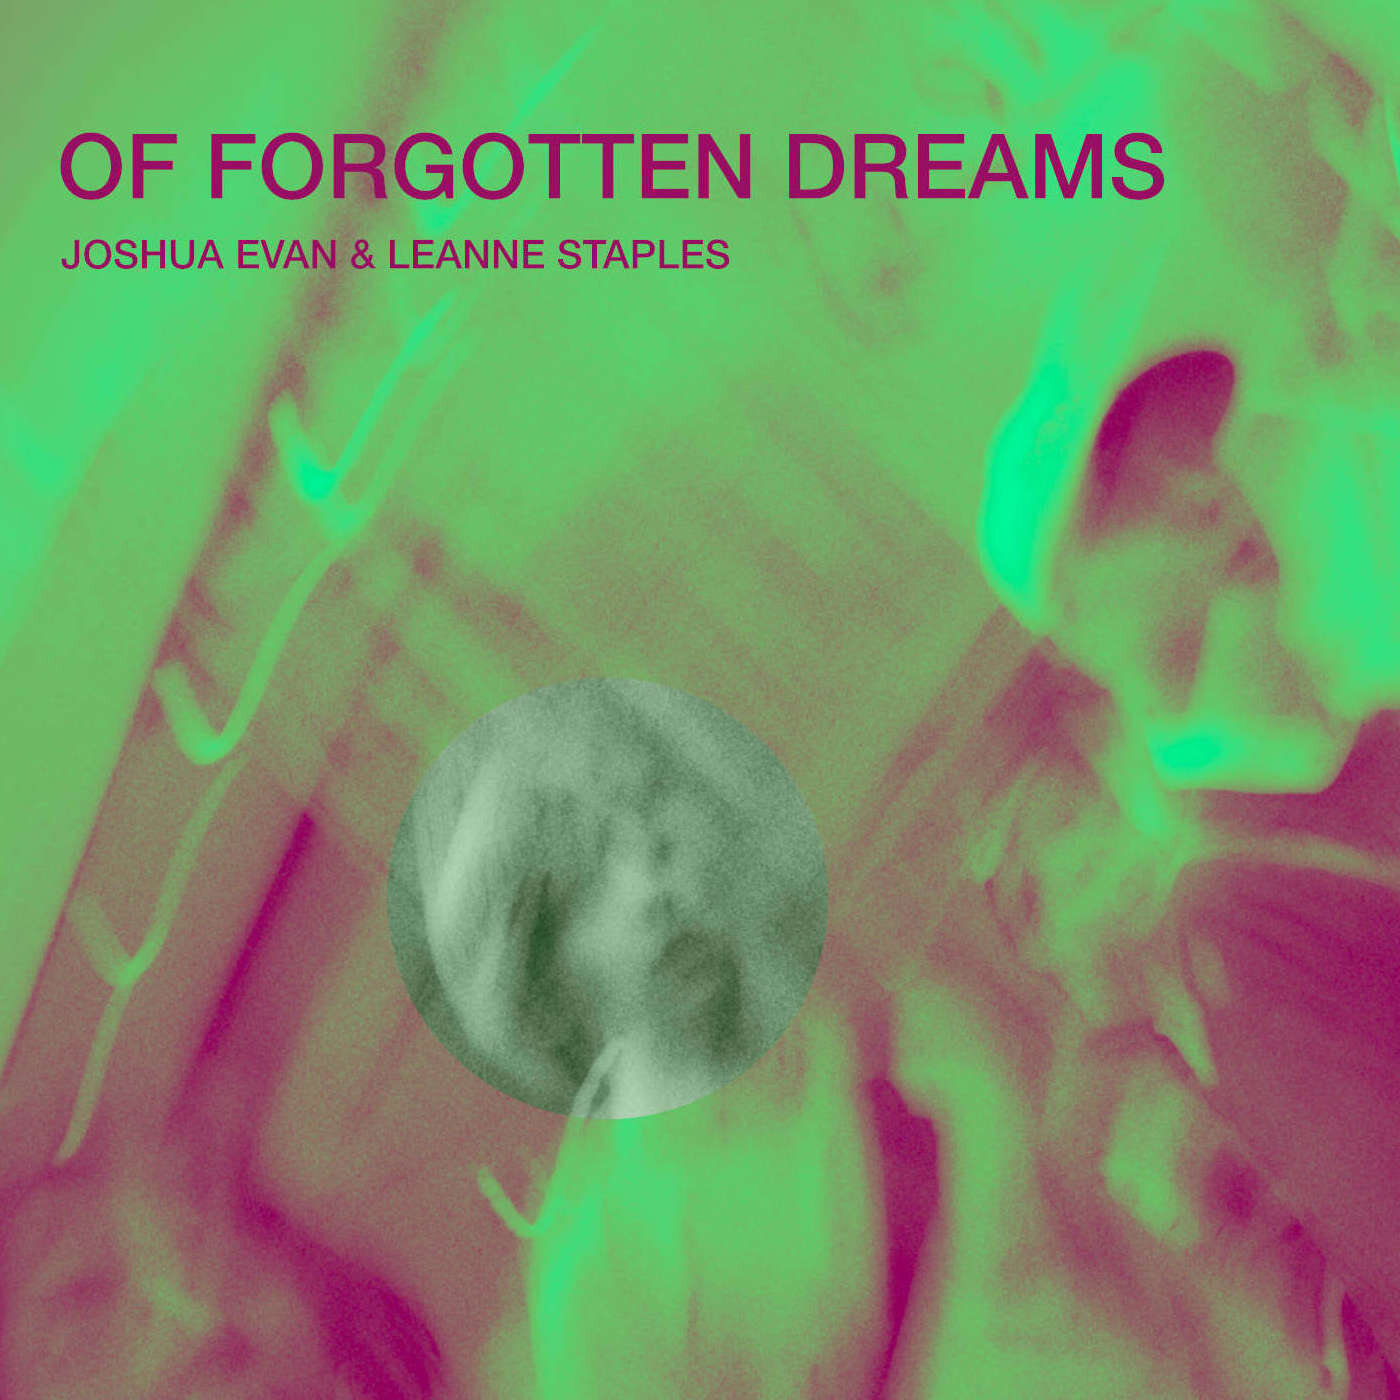 Of Forgotten Dreams by Joshua Evan + Leanne Staples